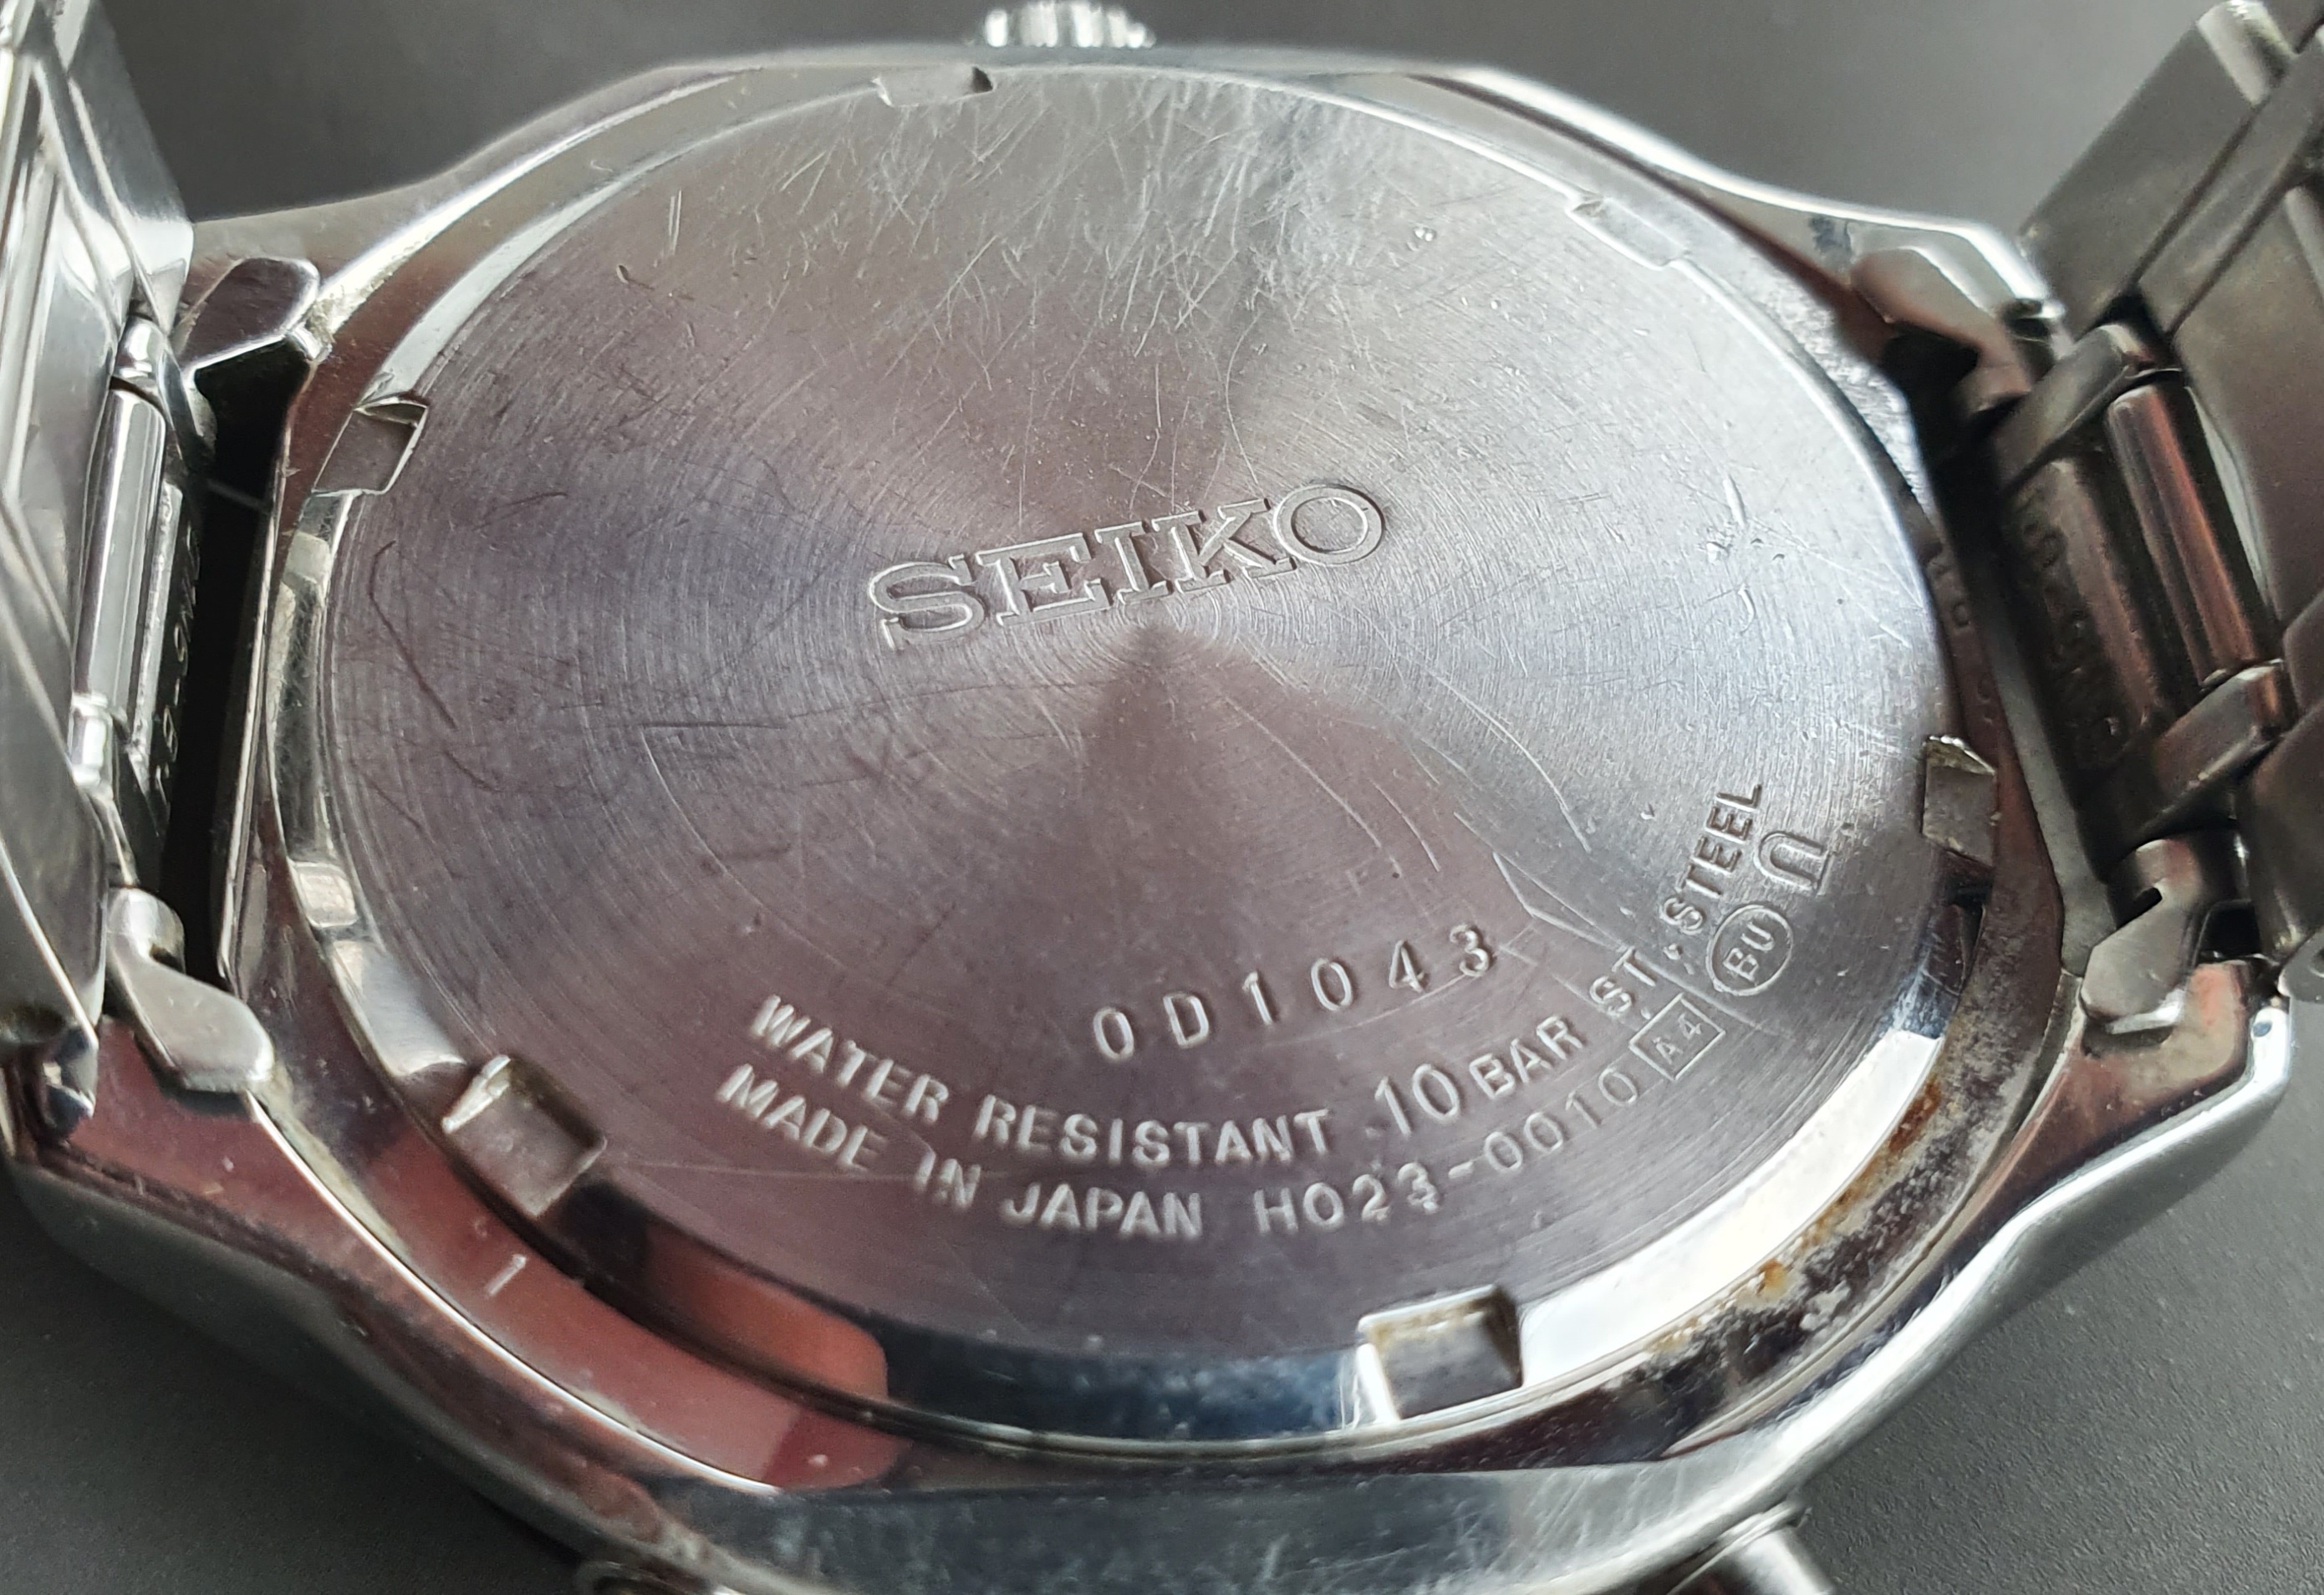 Seiko Sky Professional SBDR003 | Omega Forums